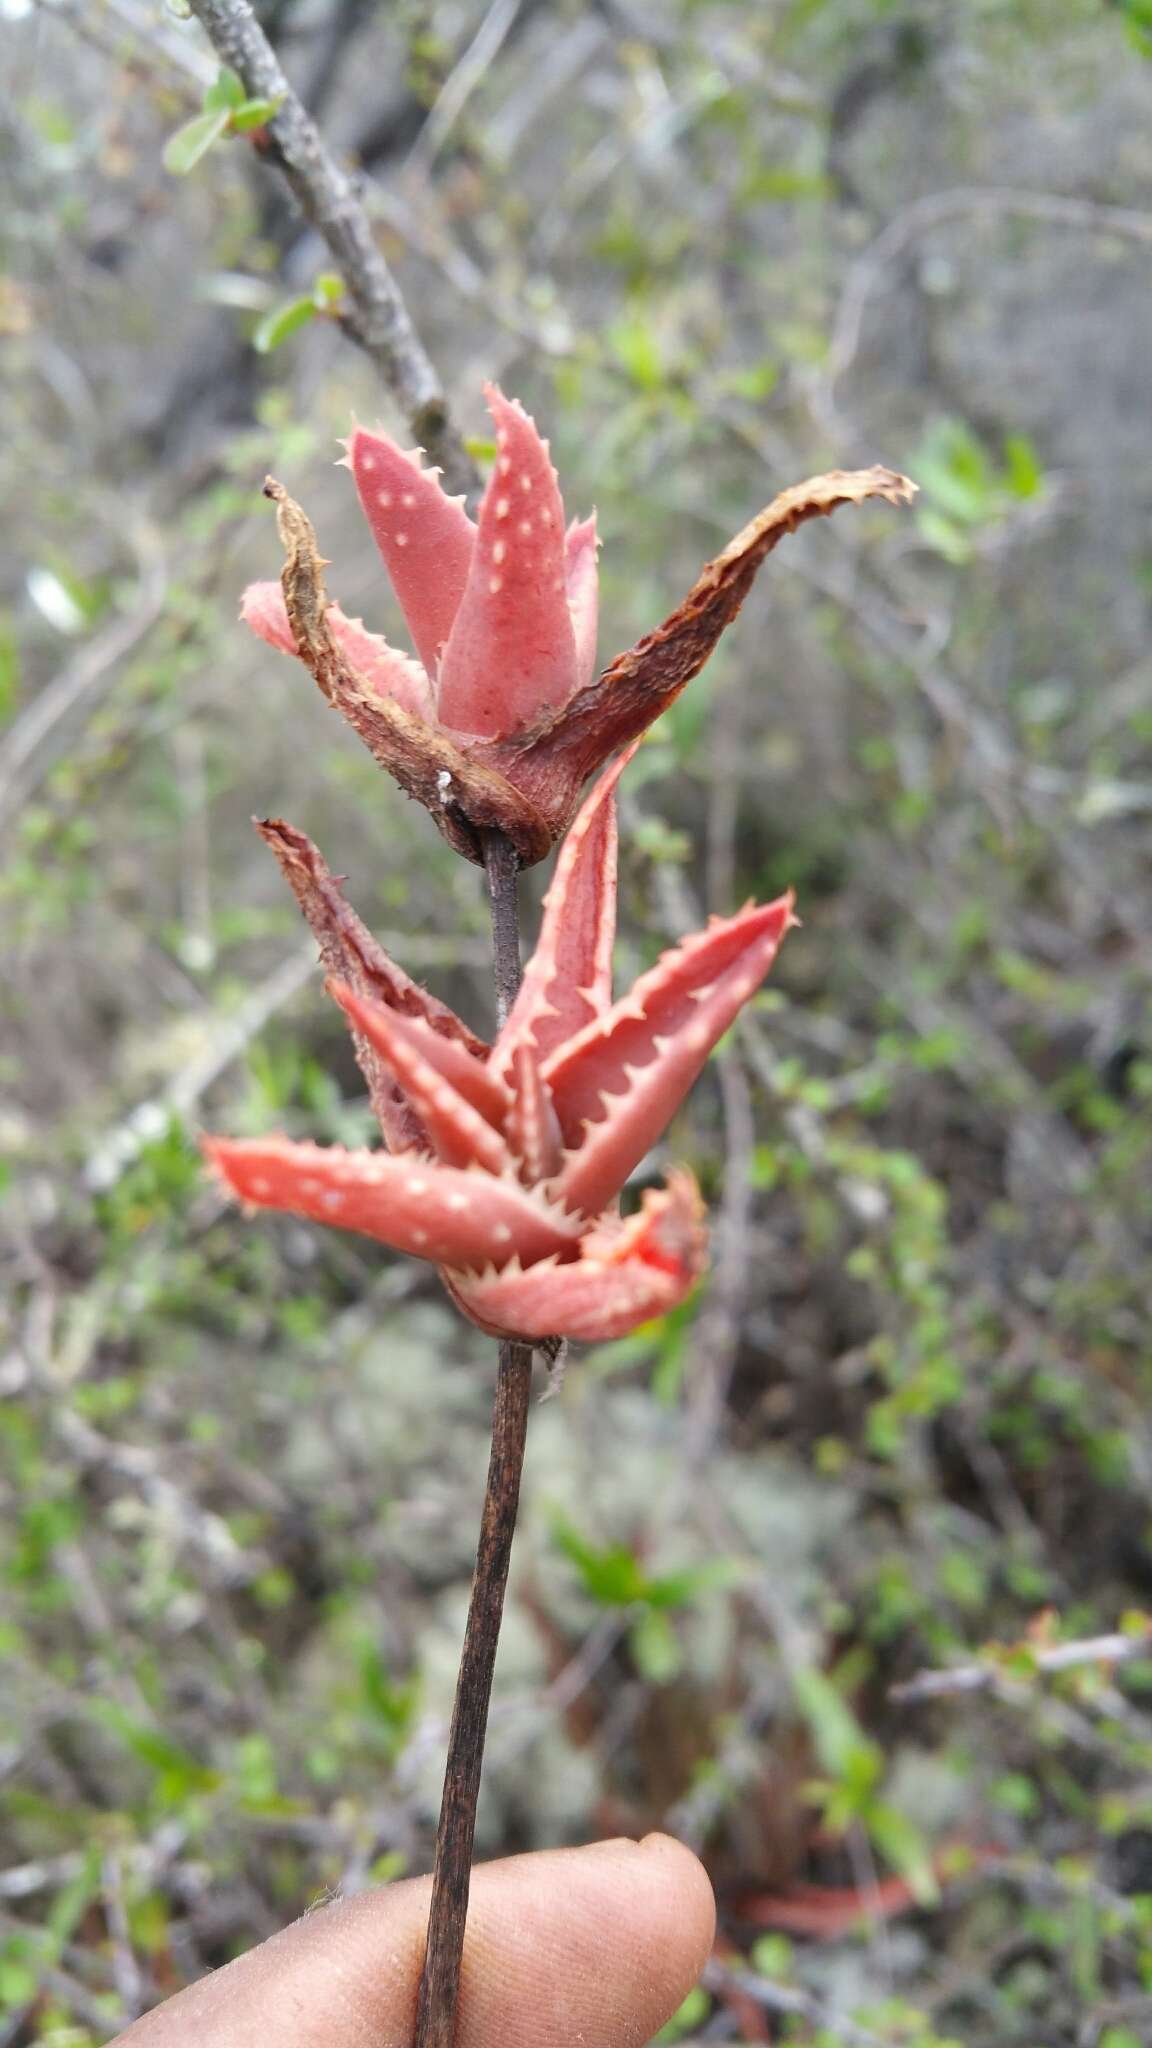 Image of Aloe leandrii Bosser